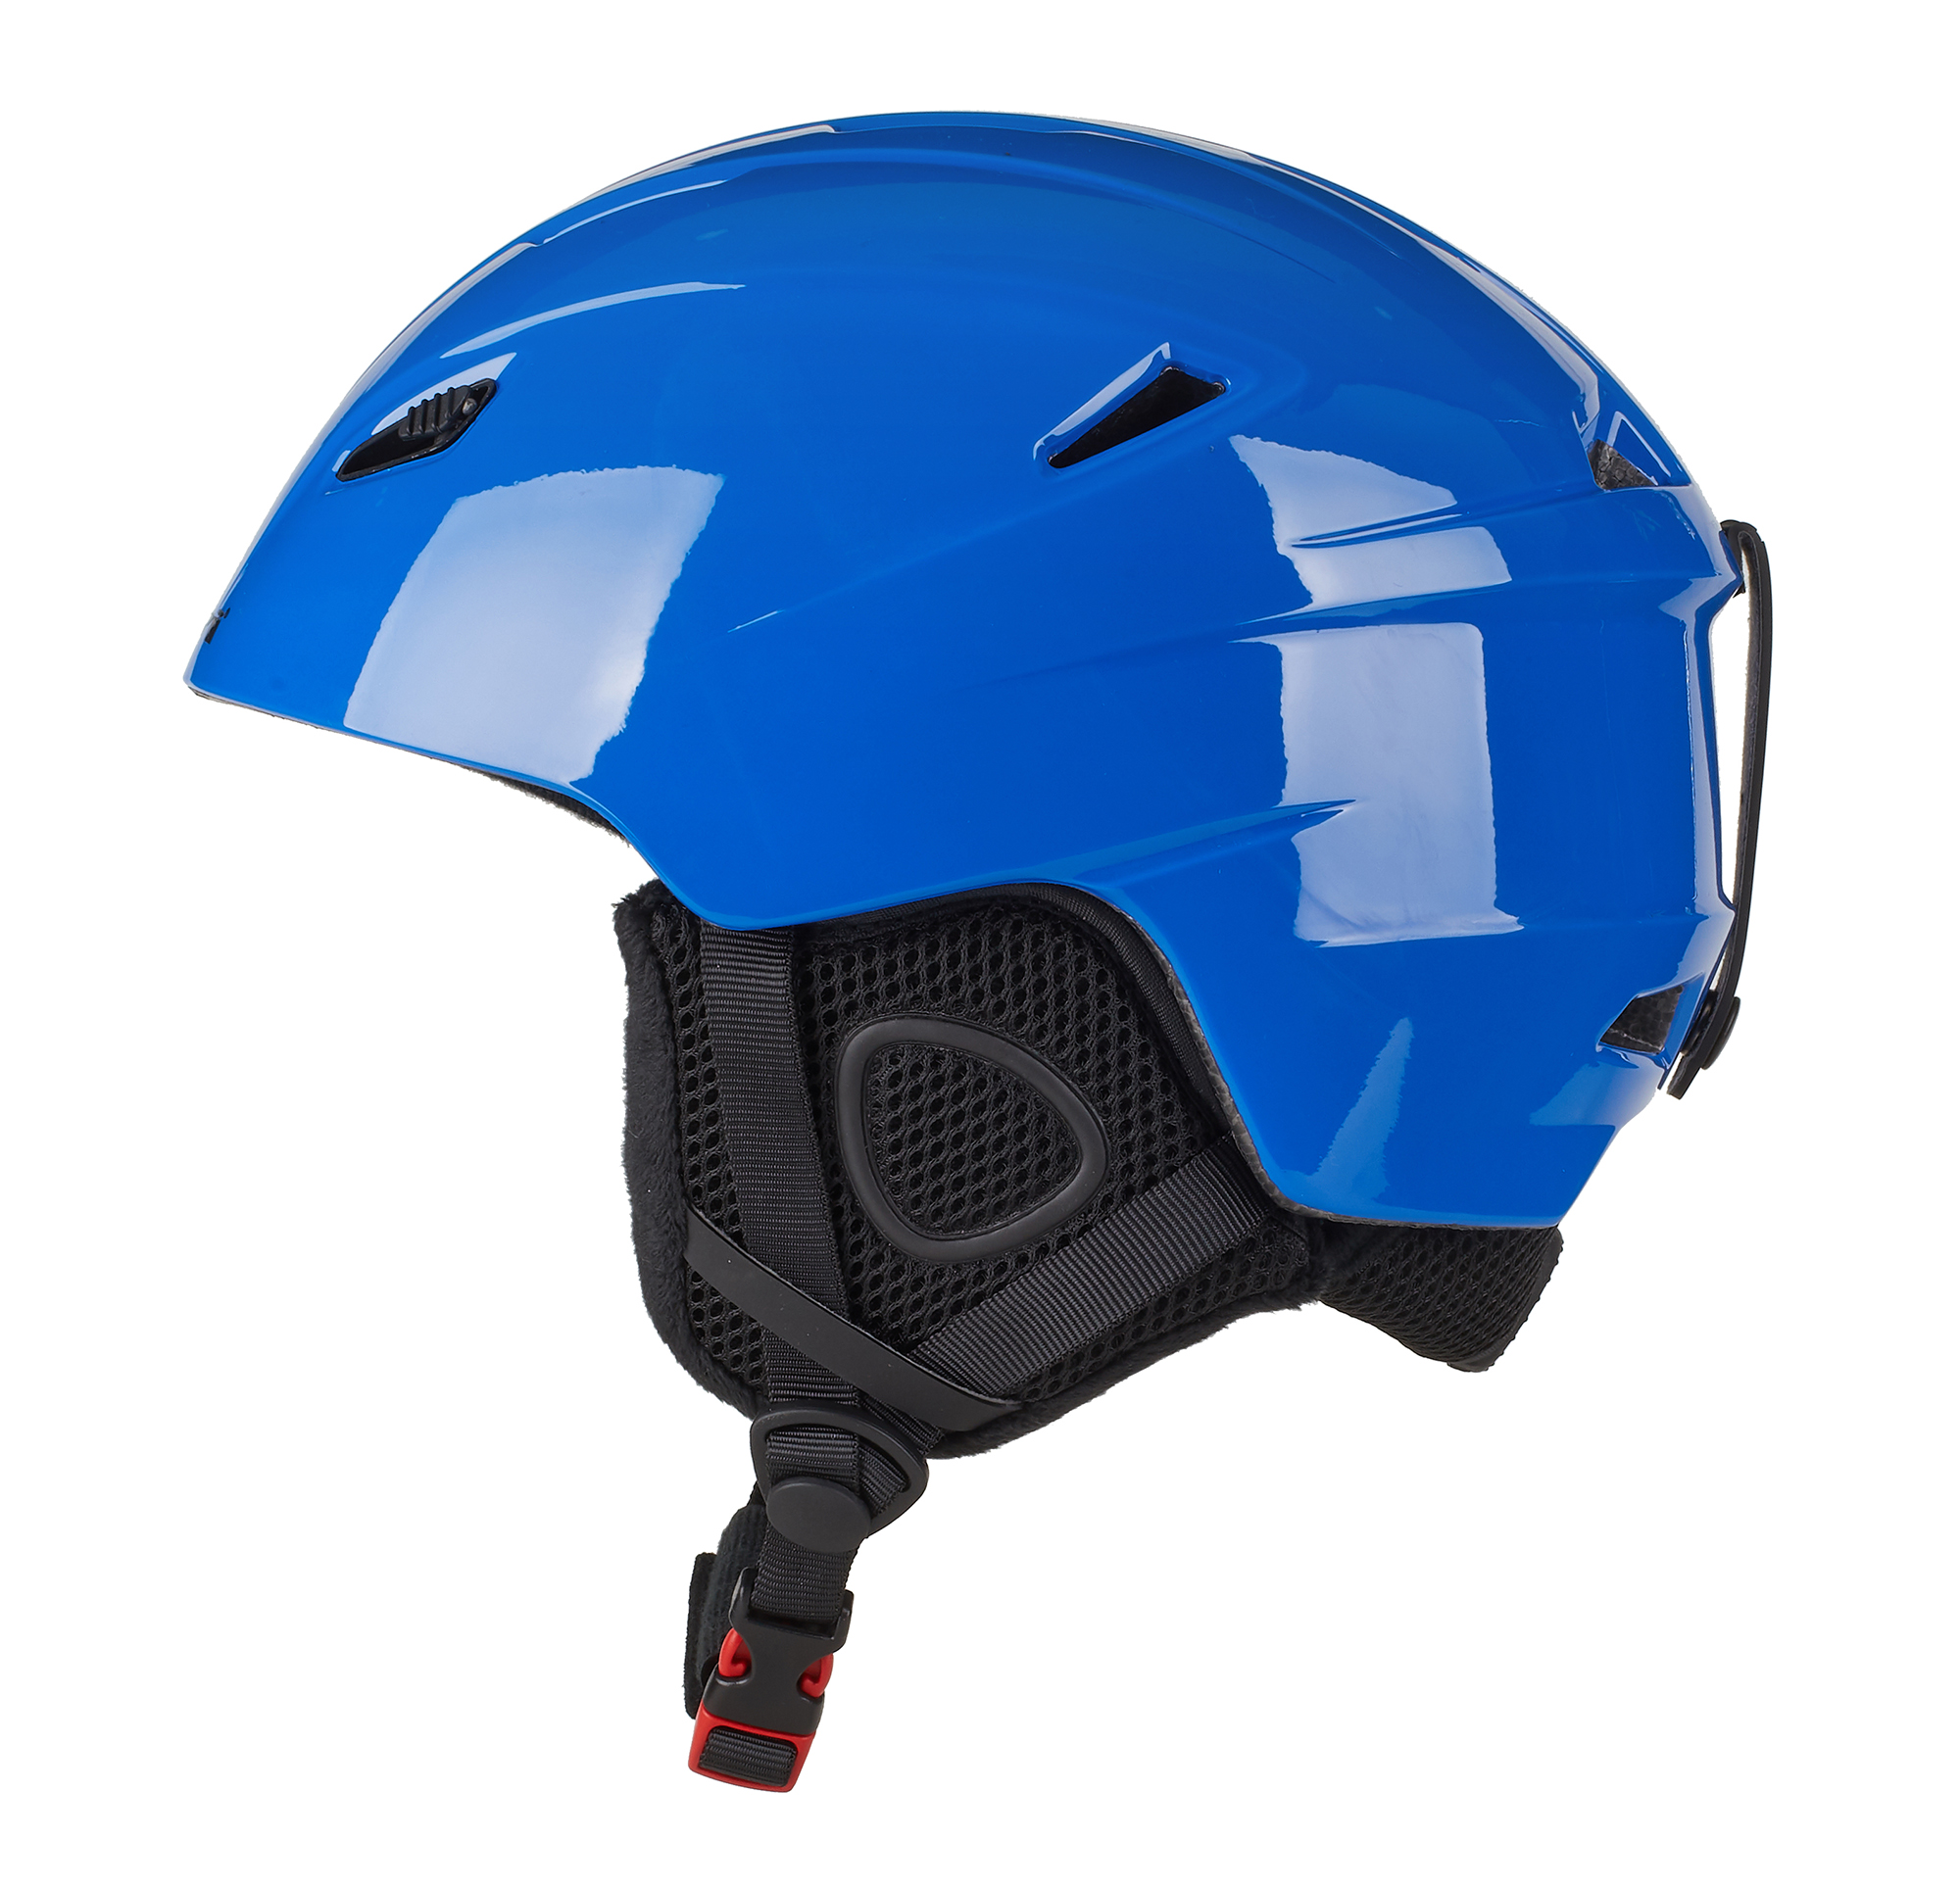 PTL-032 Ski protection helmet snowboard skiing helmet with CE EN1077